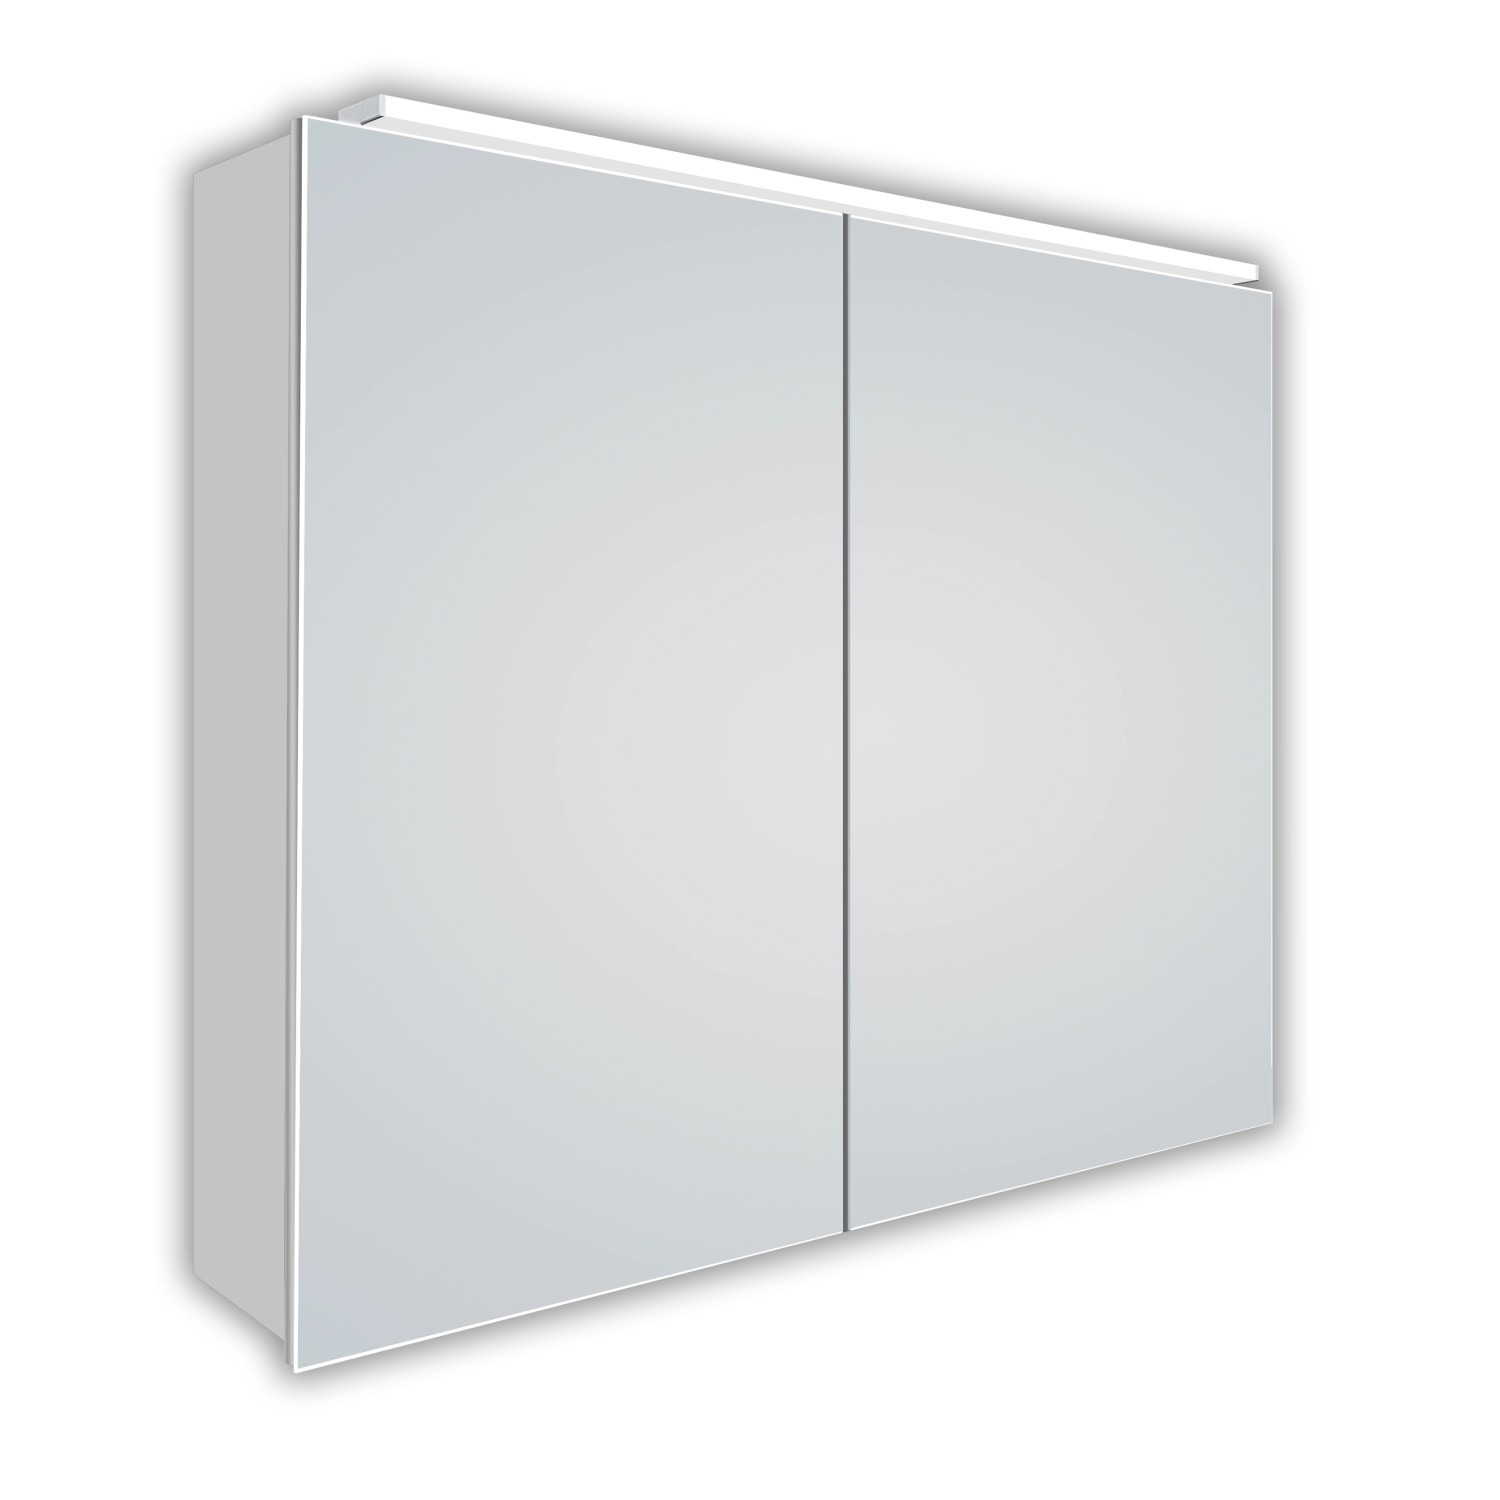 DSK Spiegelschrank Aluminio Vegas Alufarben 70 cm